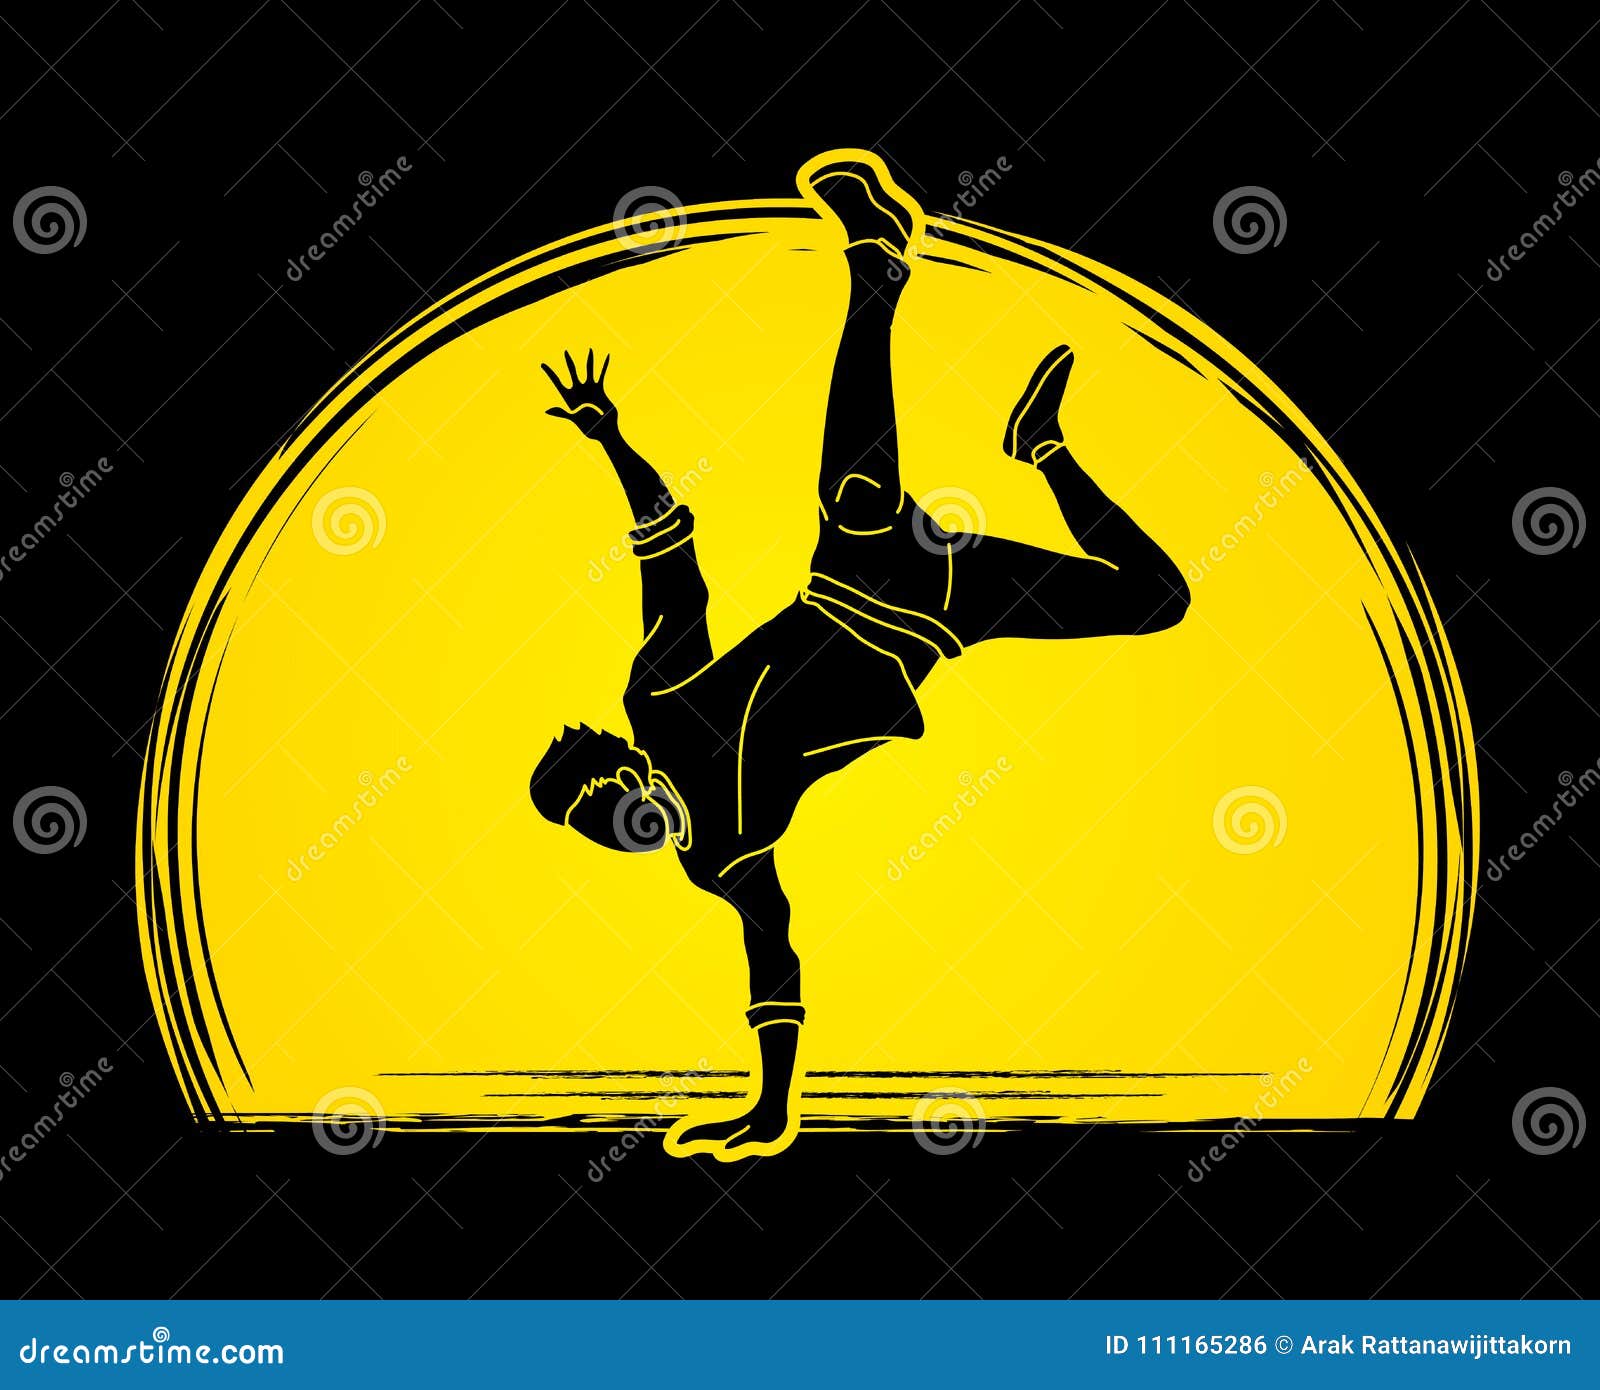 Dancer, Hip Hop, Street Dance, B Boy, Dance Action Graphic Vector Stock ...